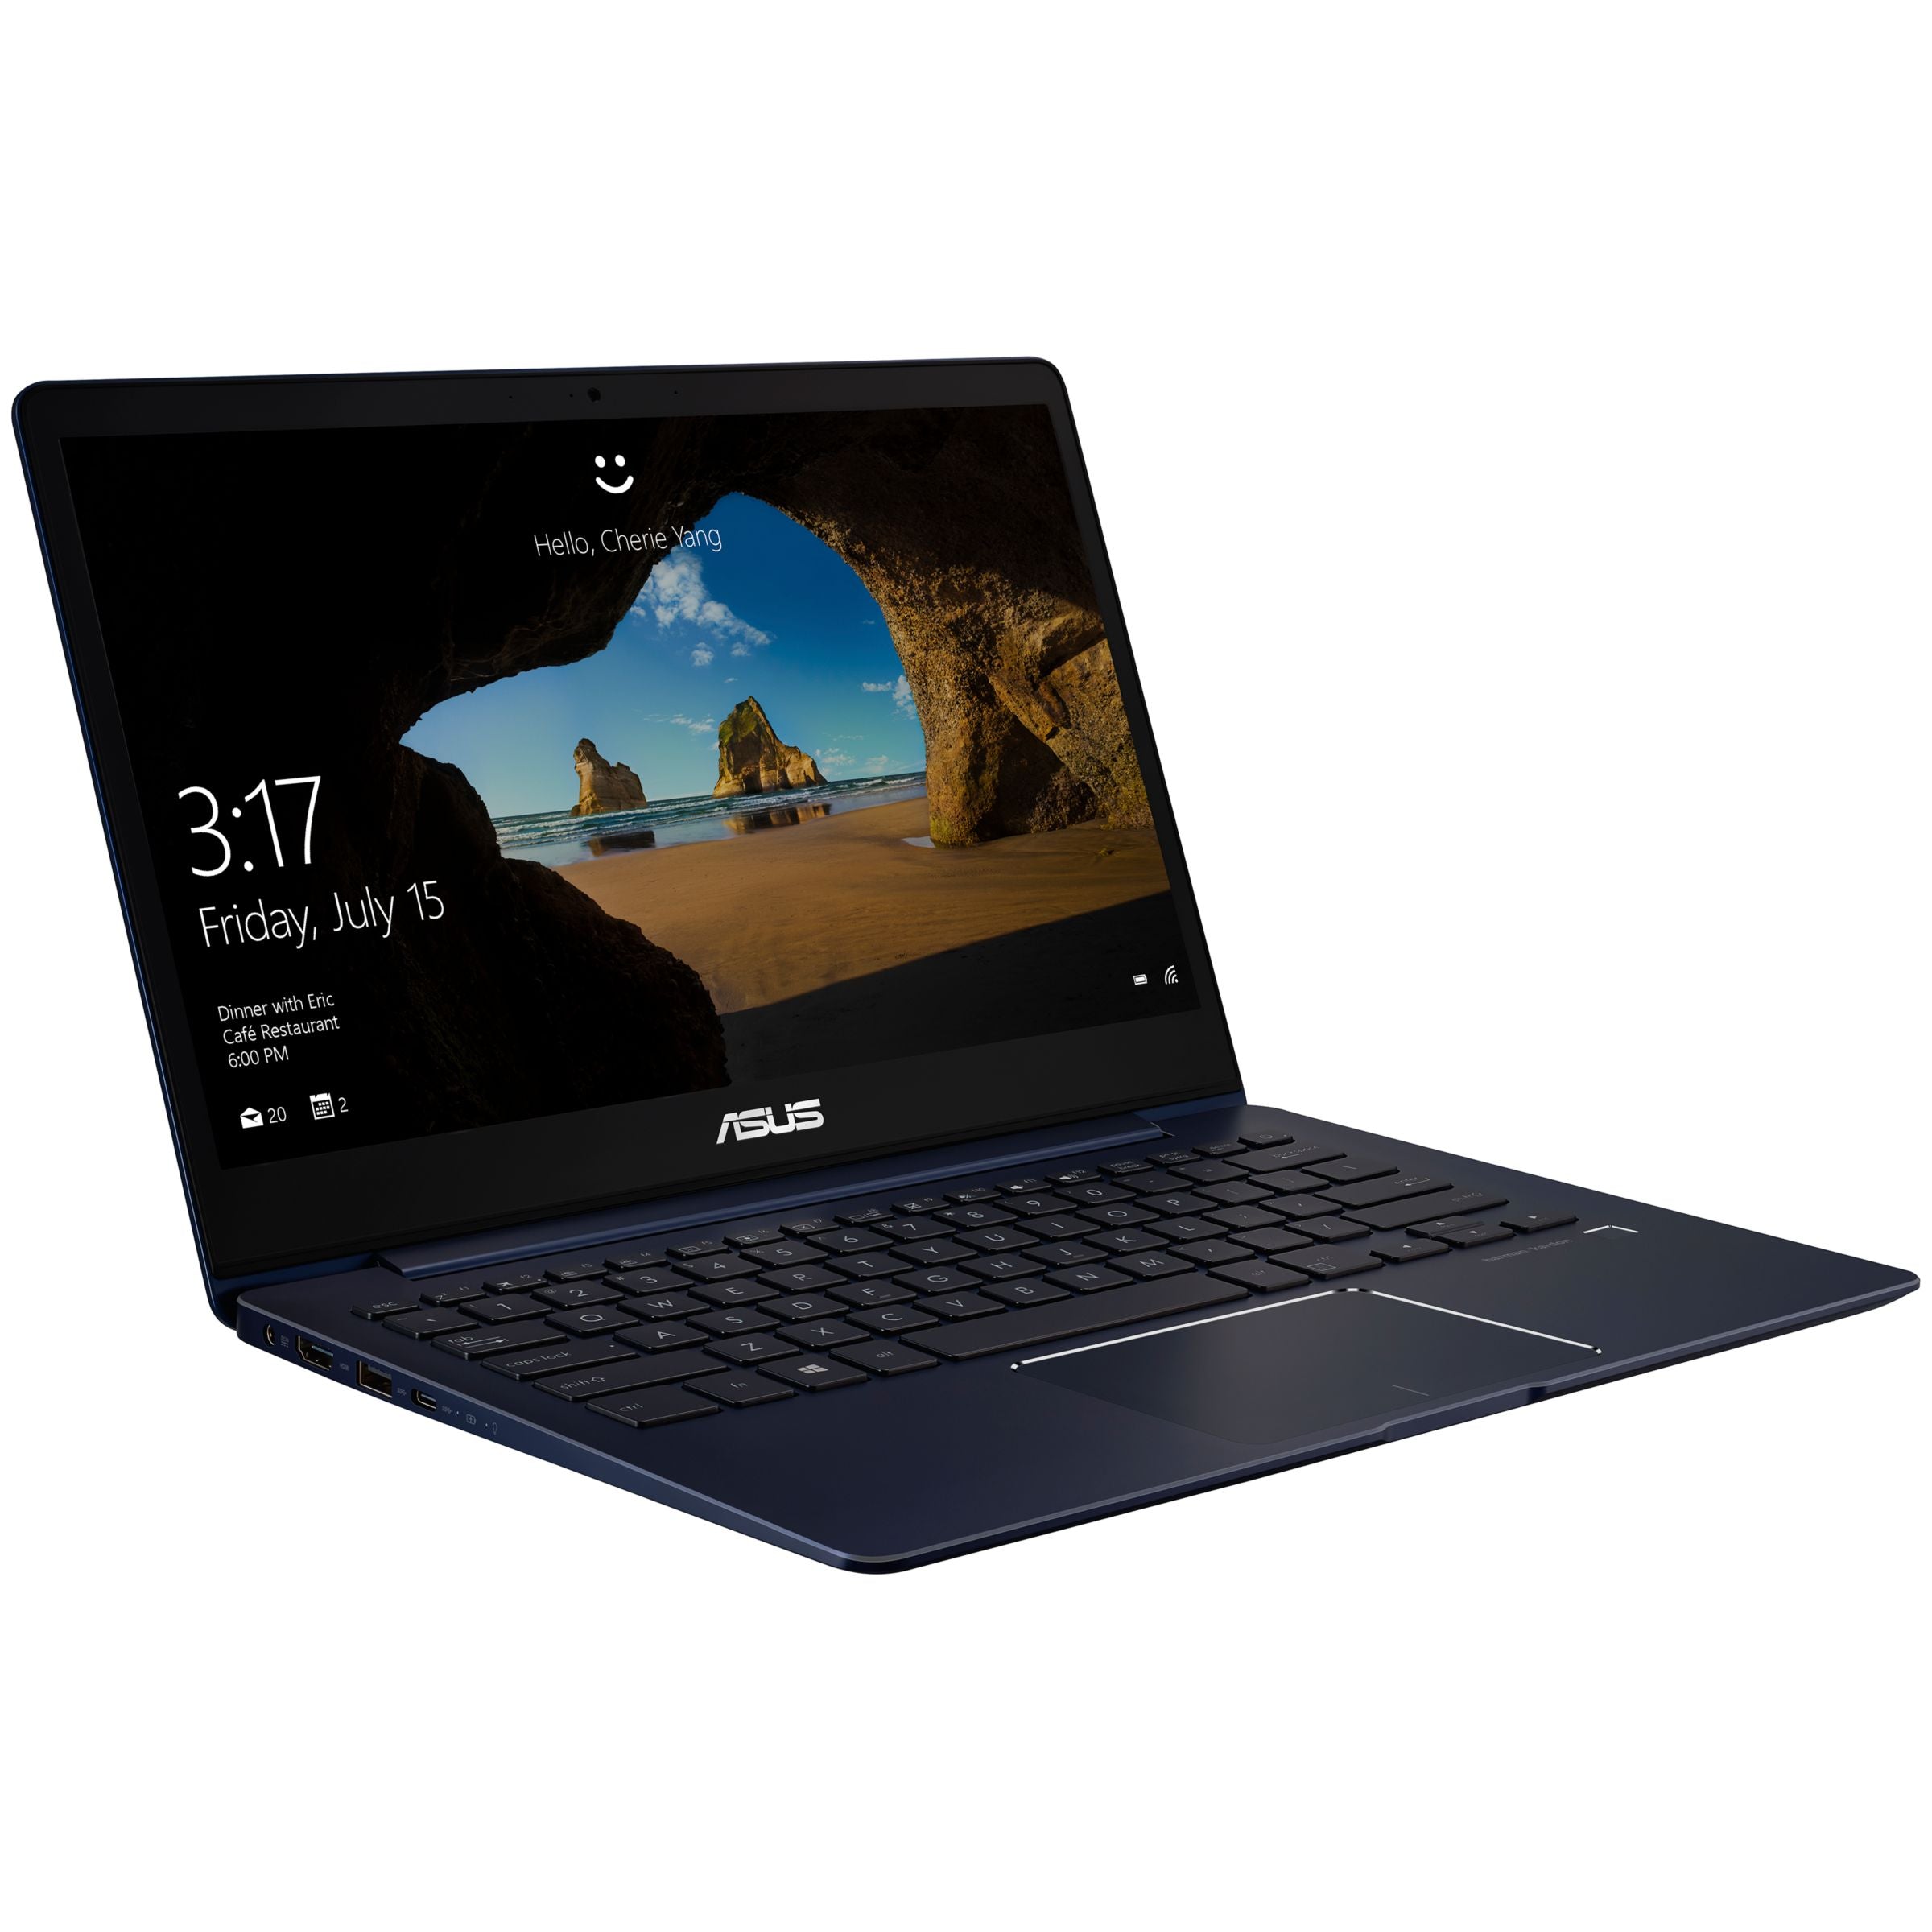 ASUS Zenbook UX331UN-EG009T 13.3" Laptop, Intel Core i5, 8GB RAM, 256GB SSD, Blue - Refurbished Excellent